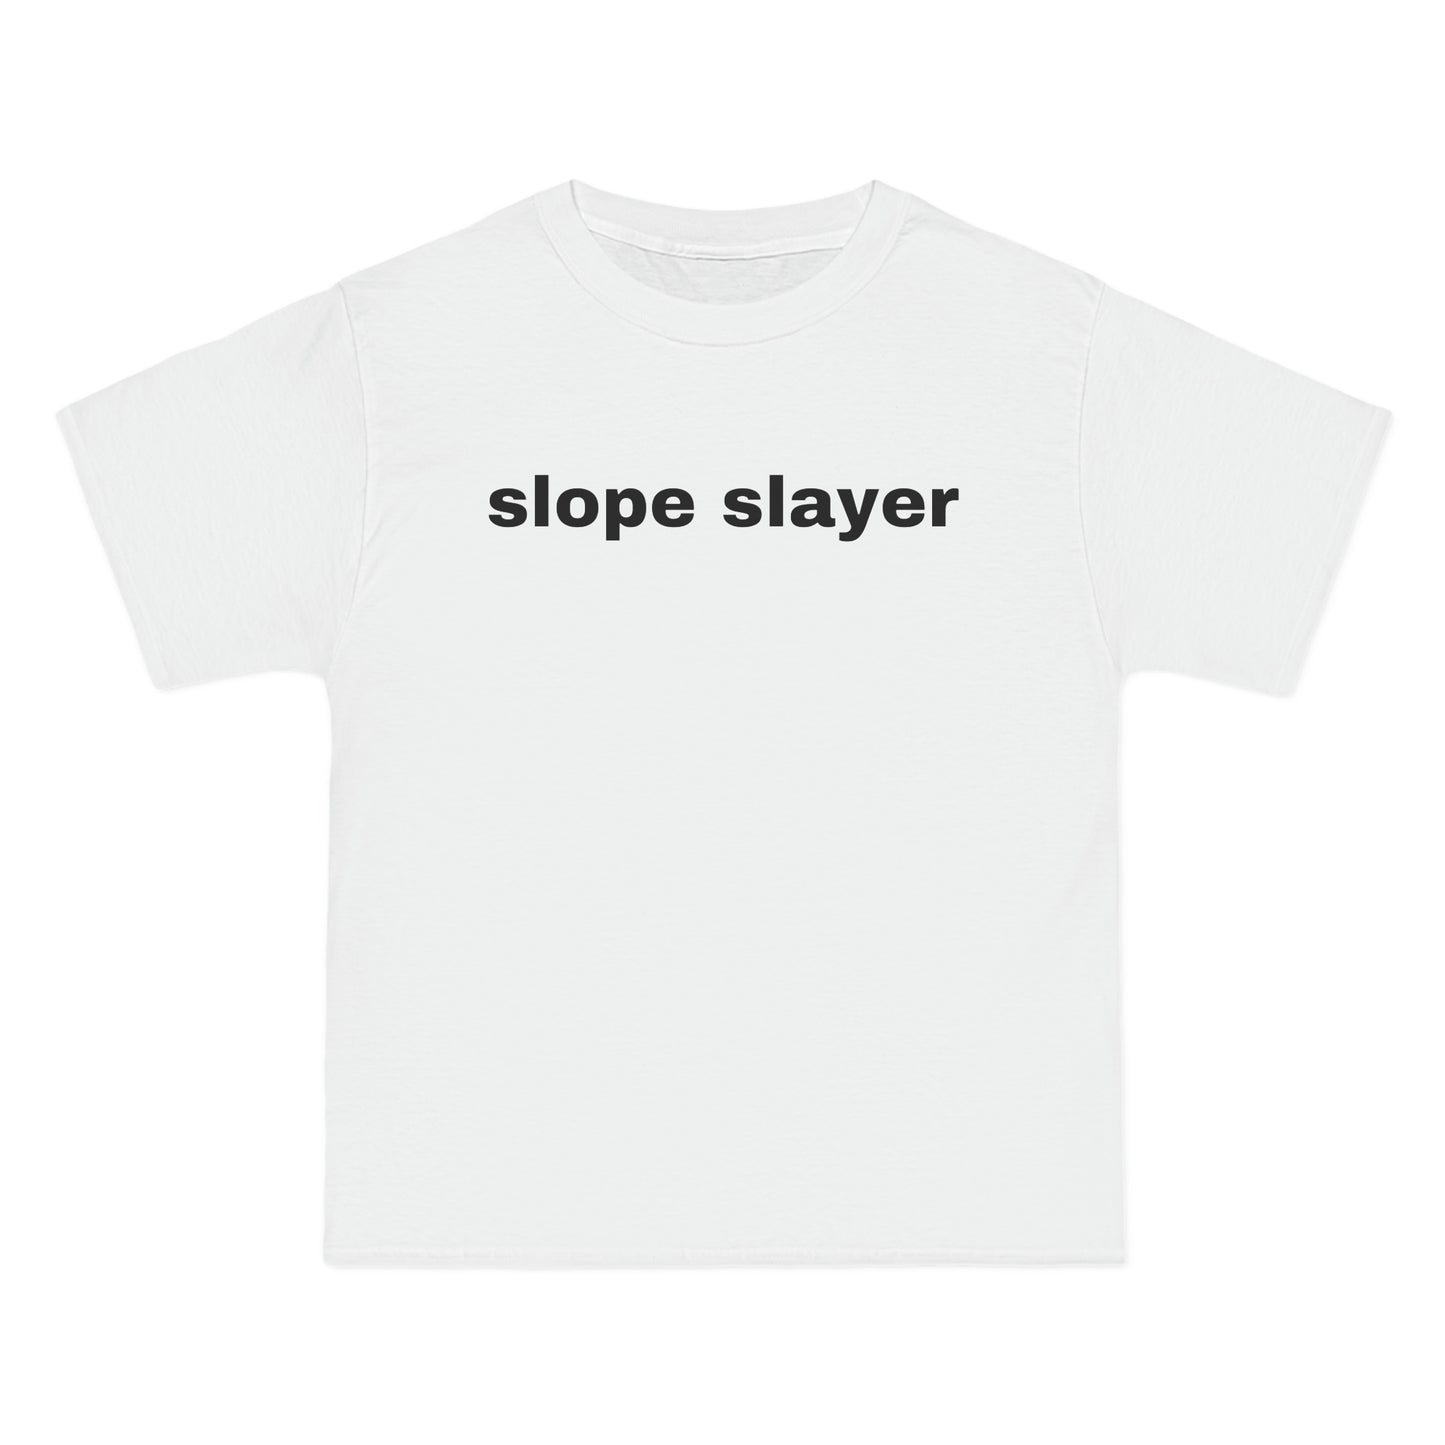 slope slayer Tee